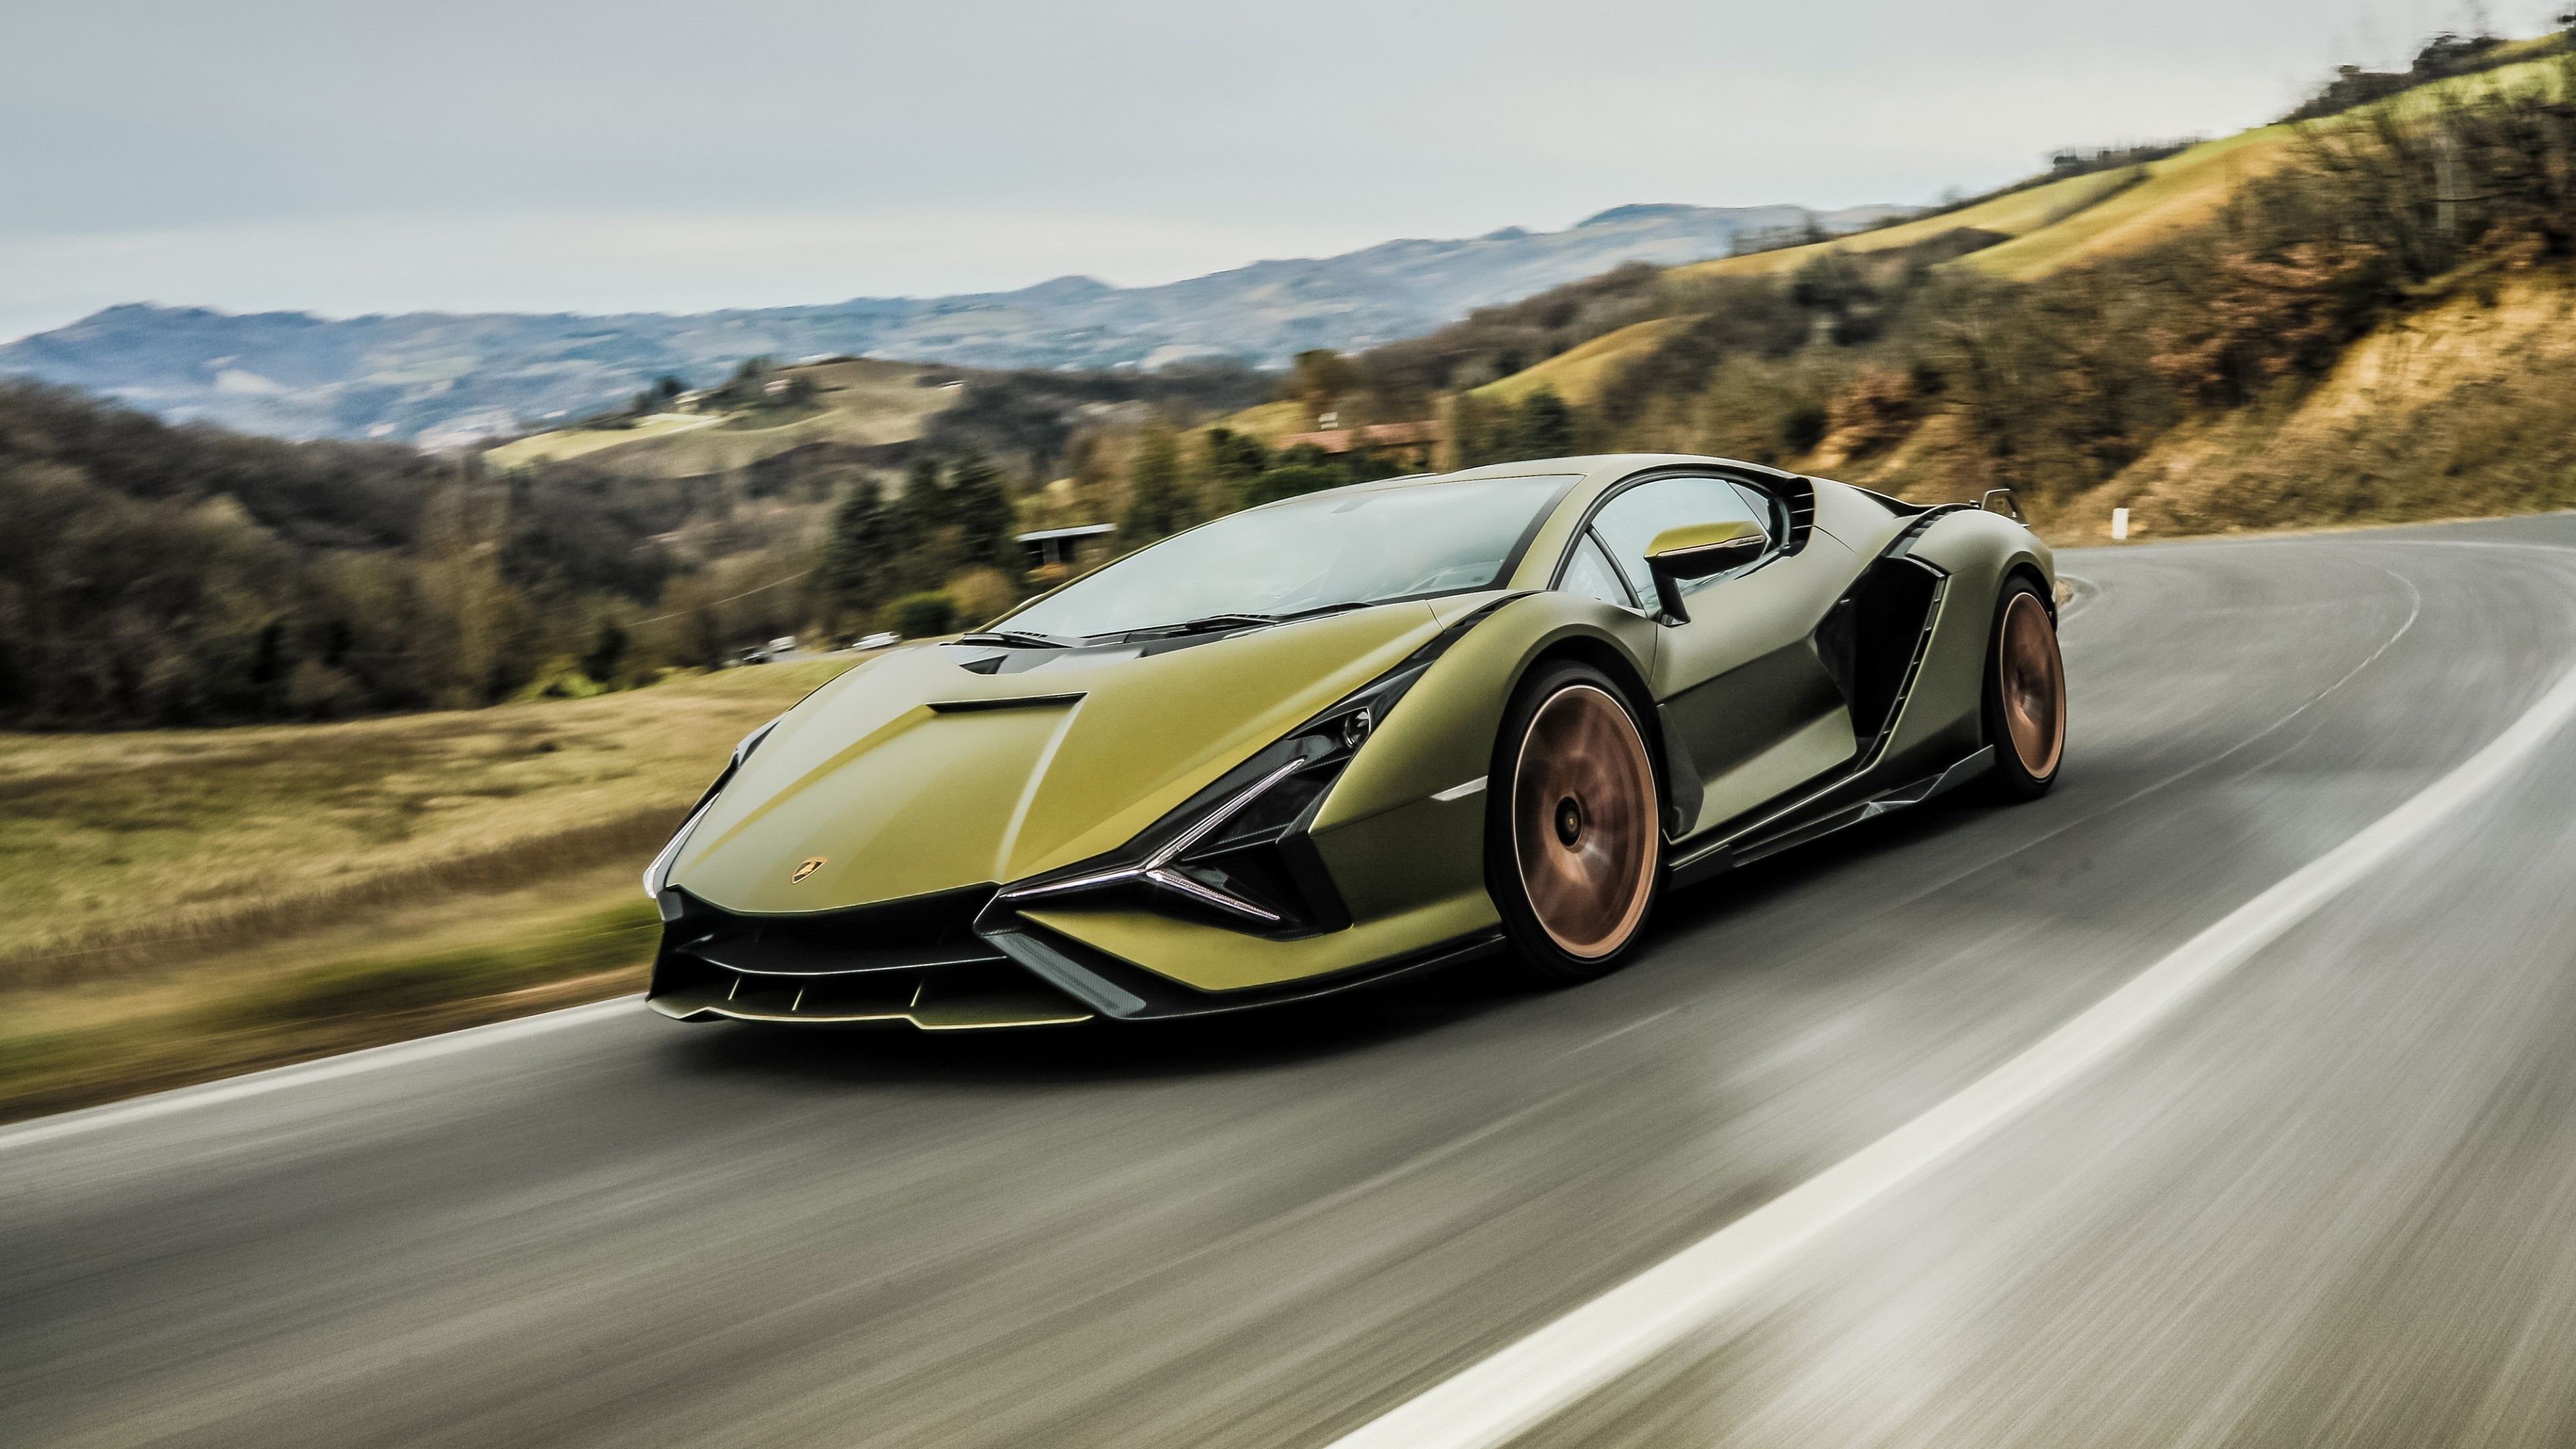 Lamborghini Sian, Time wallpaper, Free pictures, Roadster beauty, 3840x2160 4K Desktop